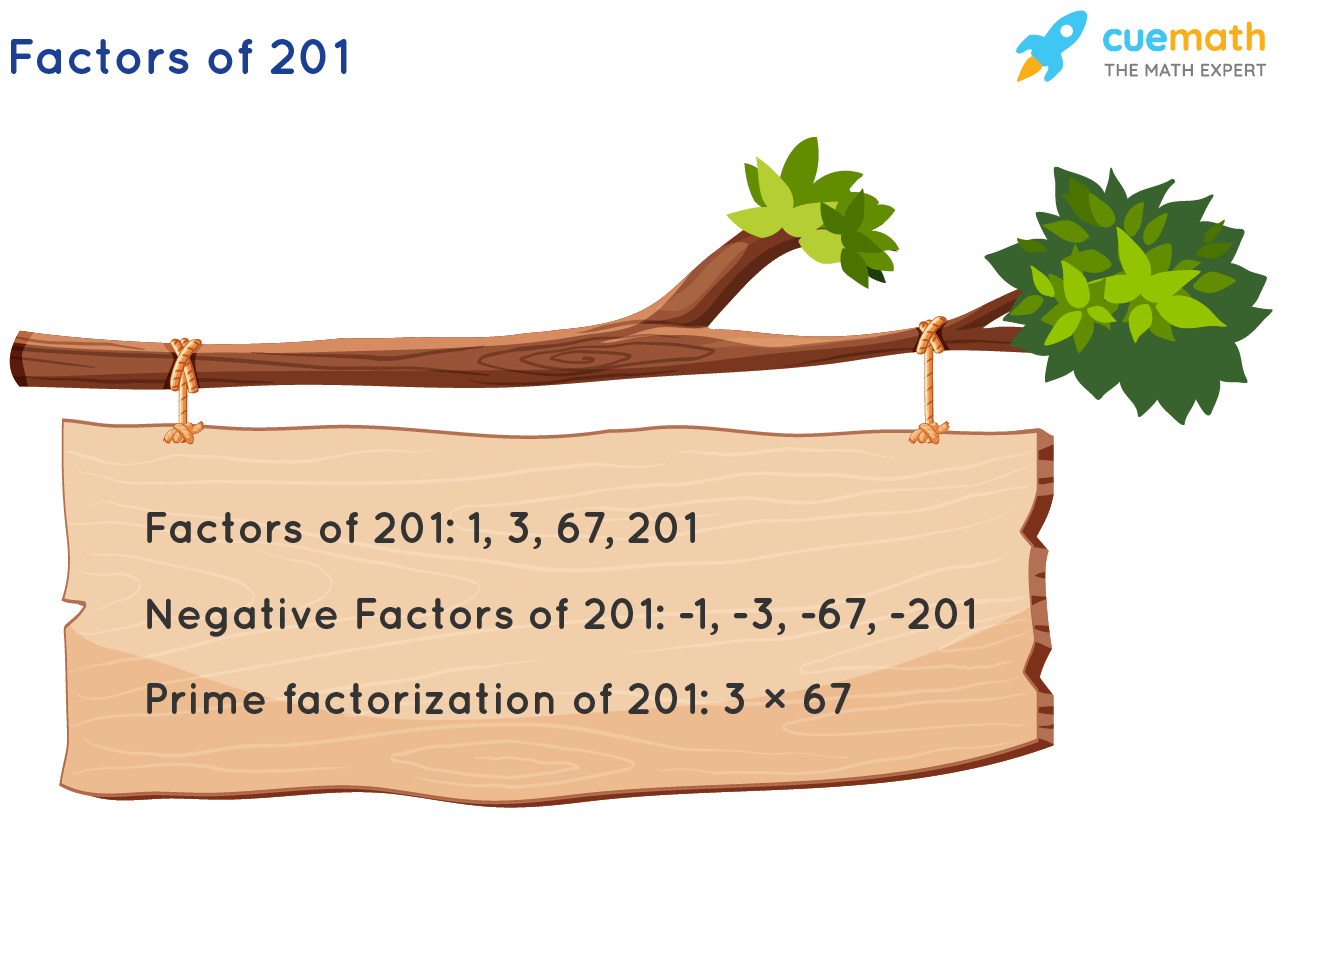 Factors of 201 - Find Prime Factorization/Factors of 201